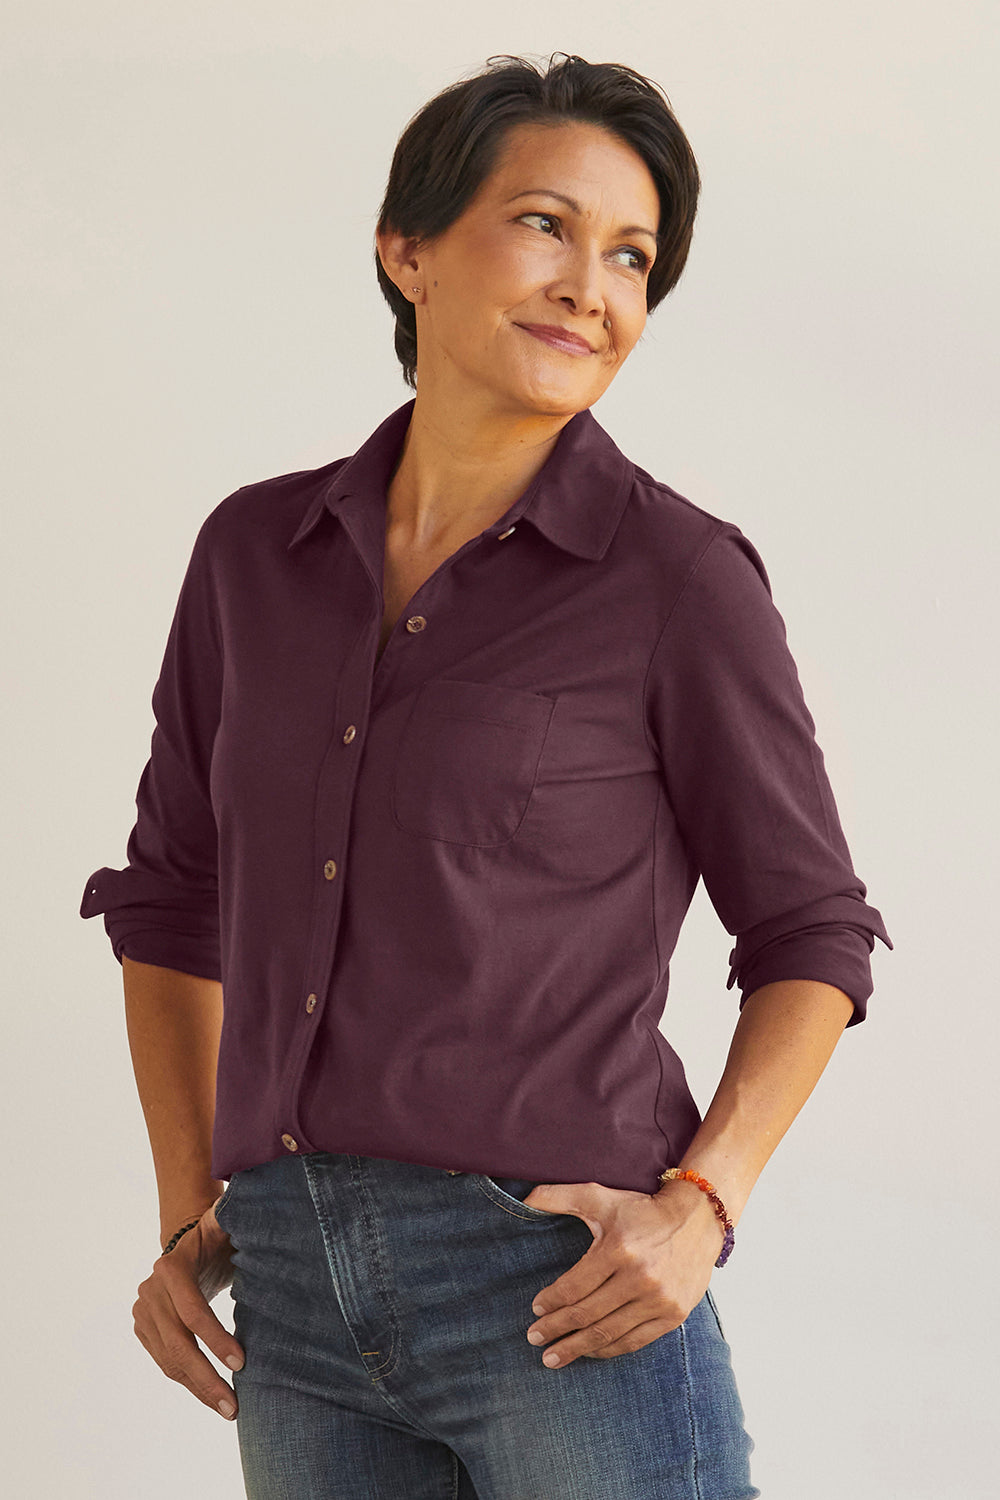 Women's 100% Organic Cotton Knit Button Down Shirt